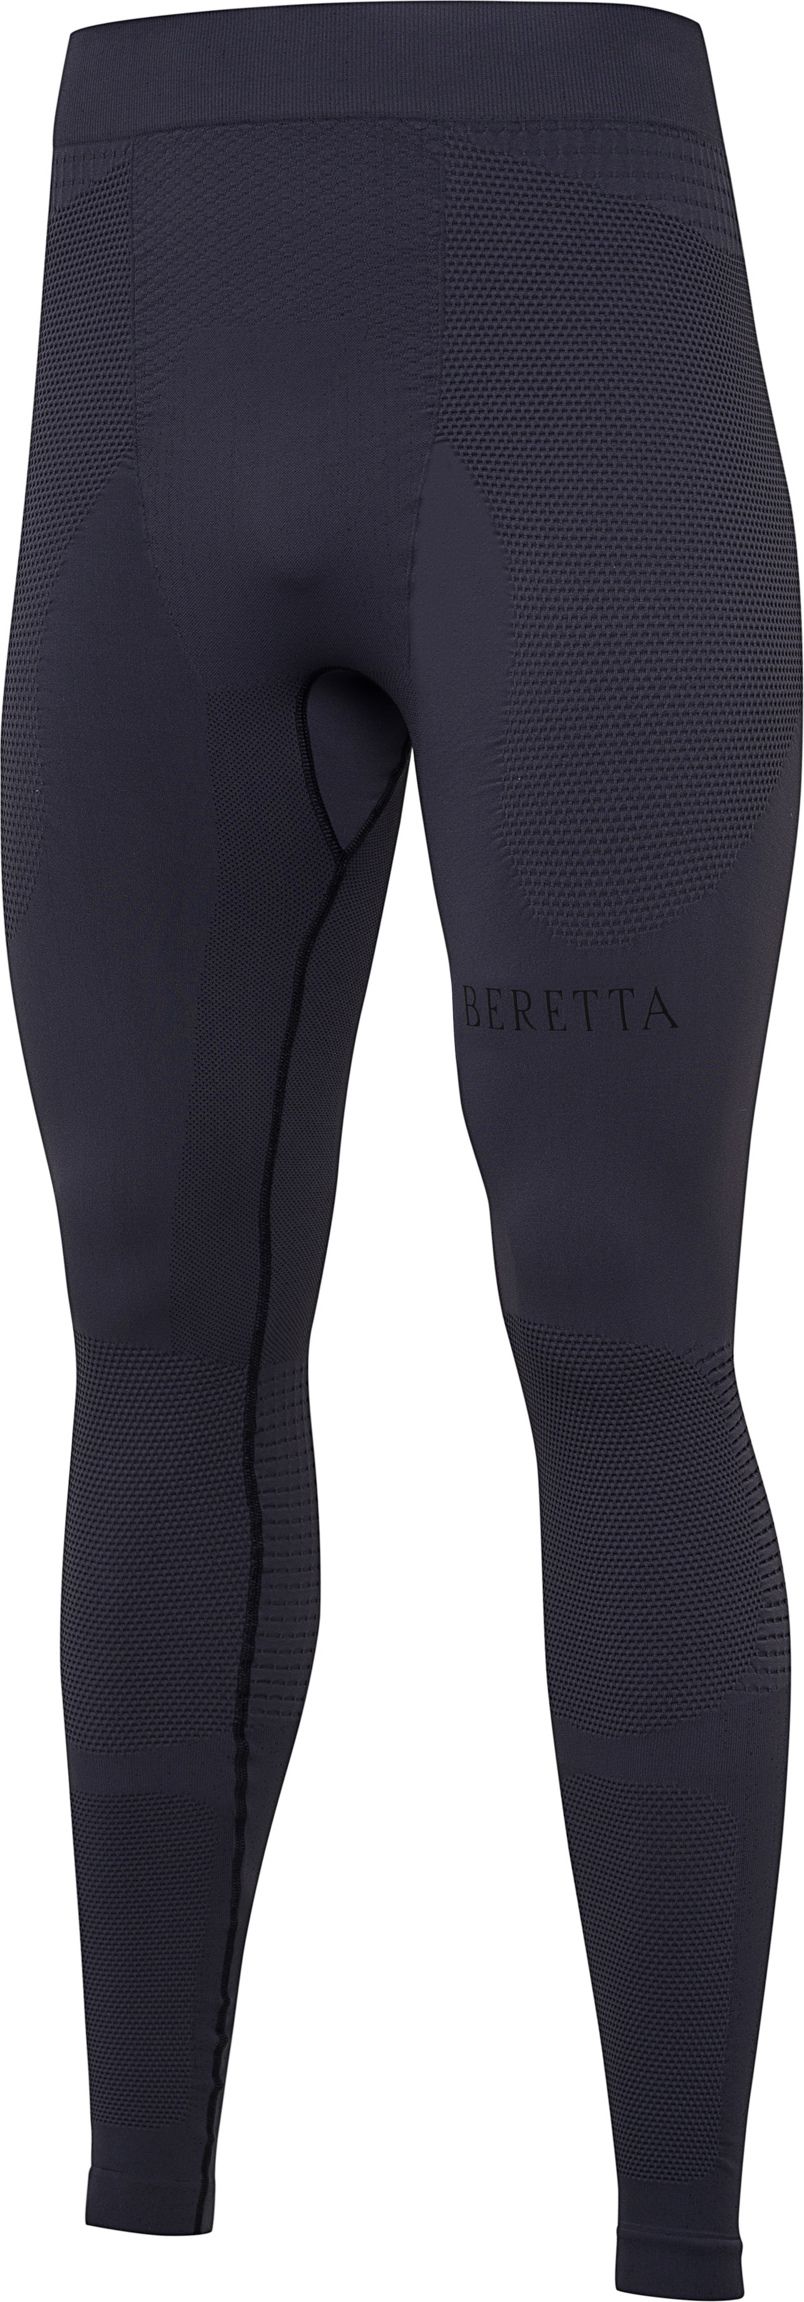 Beretta Men's Body Mapping 3D Pants Ebony